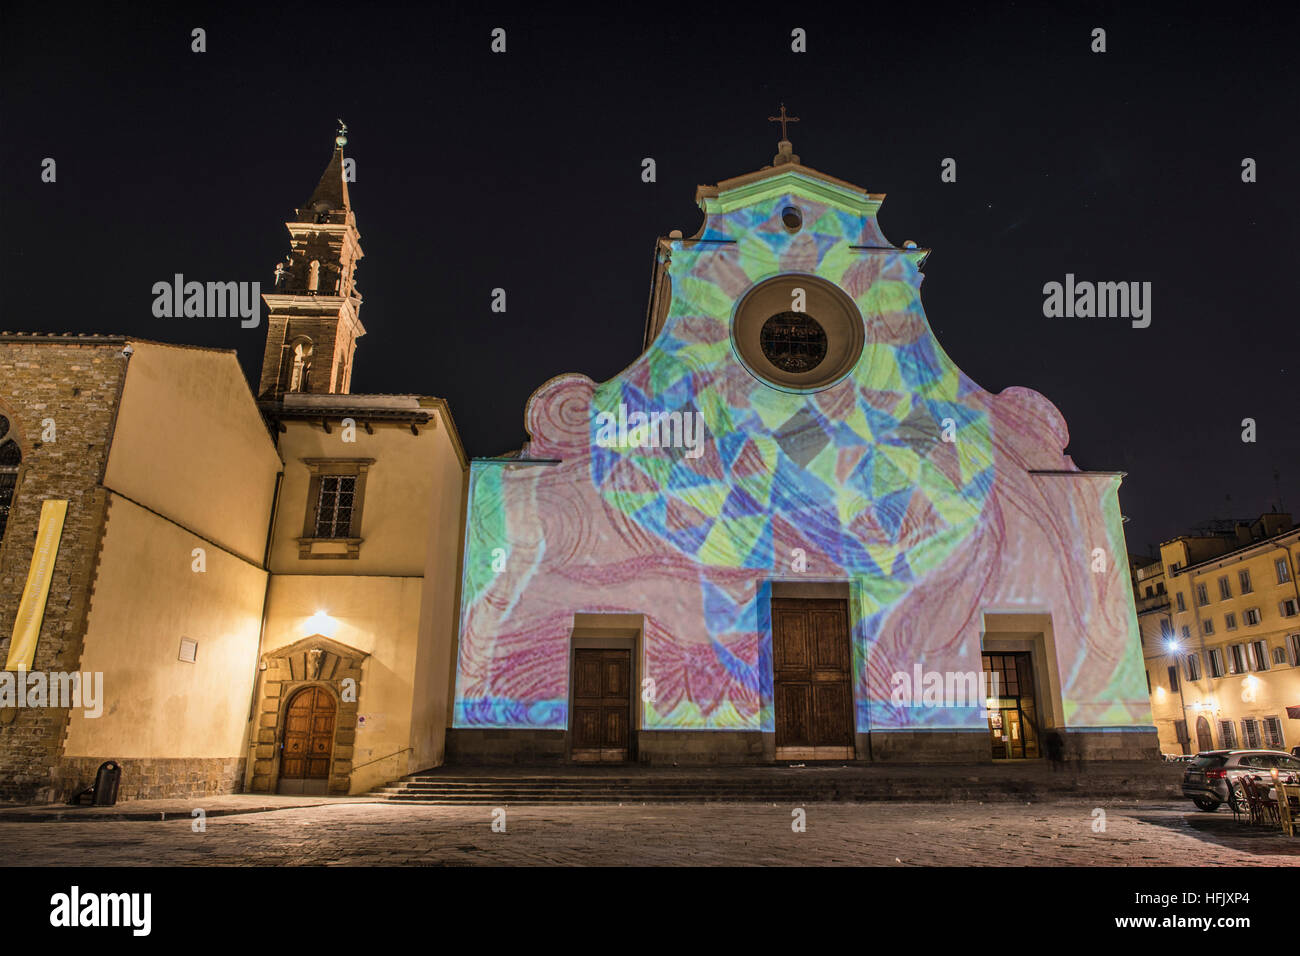 Firenze, Toscana. La iglesia de Santo Spirito, iluminados por la magia de luces y colores del evento 'Firenze Light Festival' Foto de stock